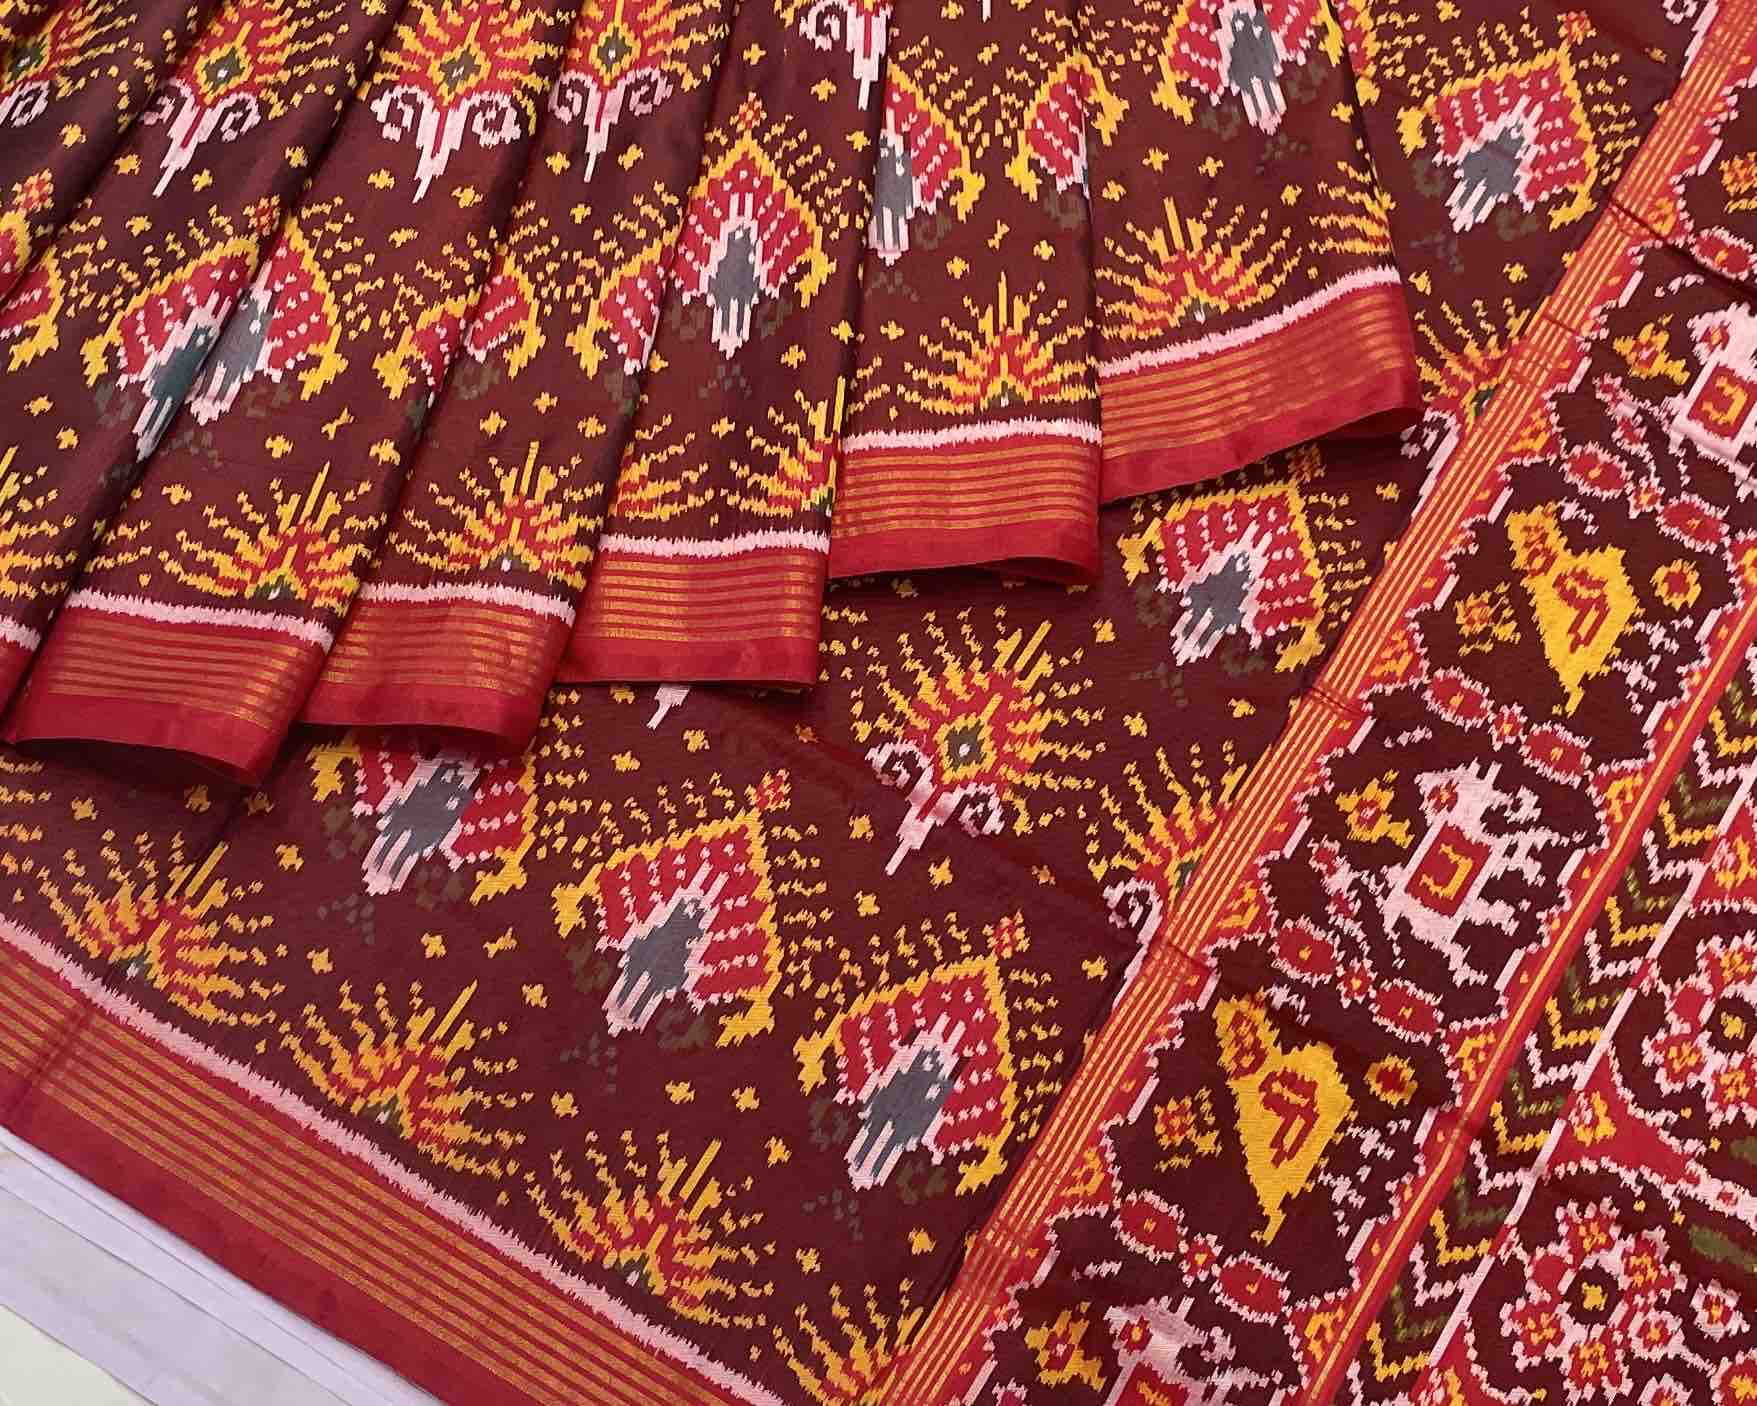 red maroon mew fancy design patola saree - SindhoiPatolaArt